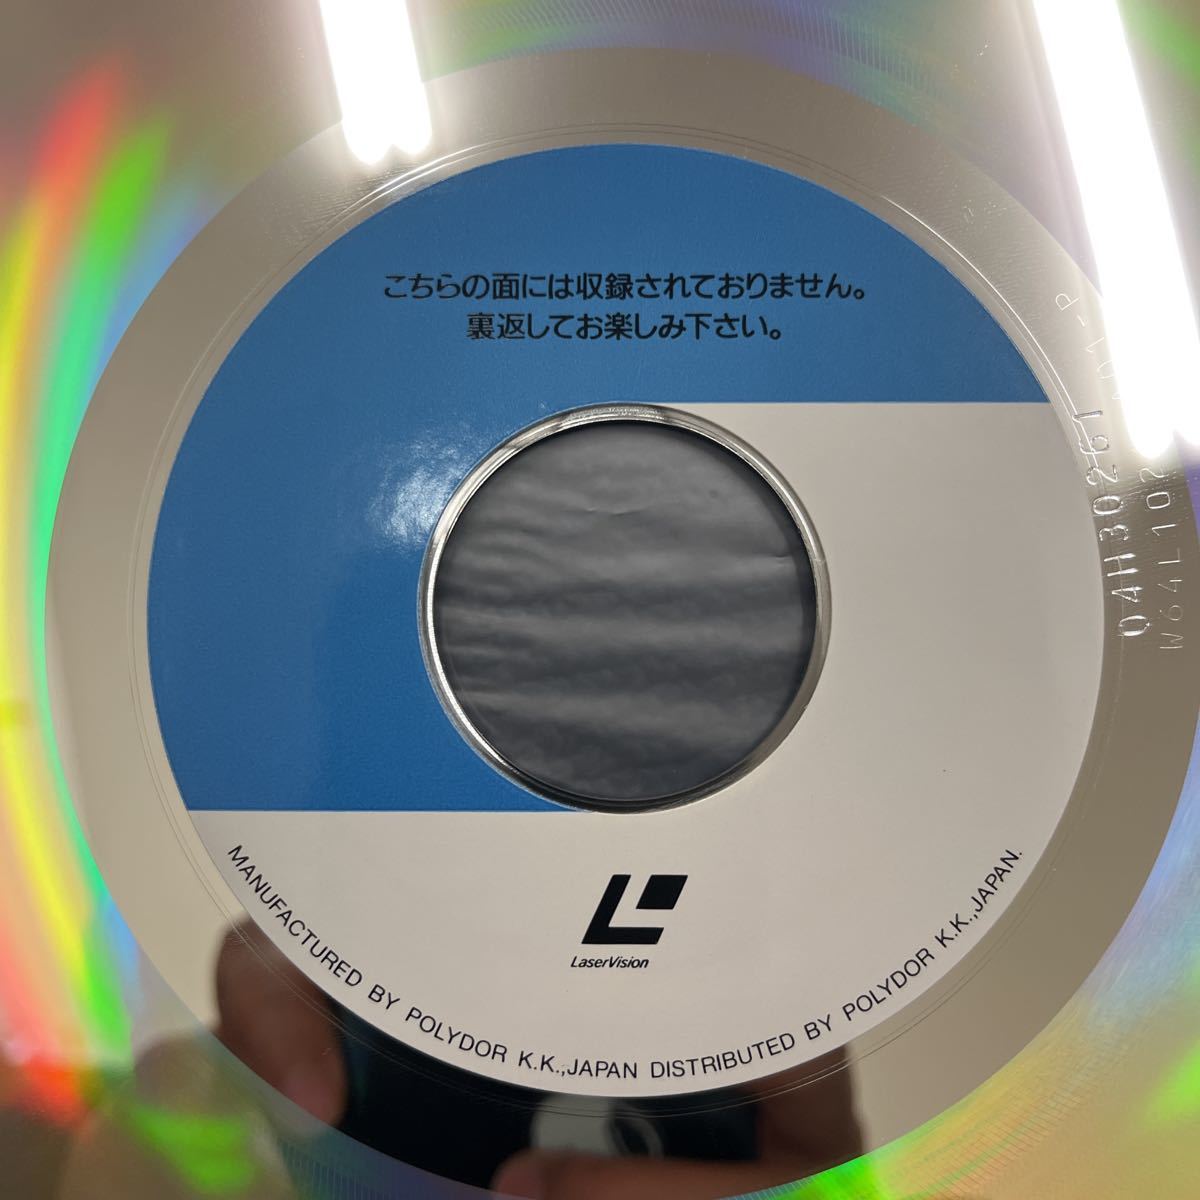 31802-169 0930N LD laser disk NHK..* black part obi attaching operation not yet verification 